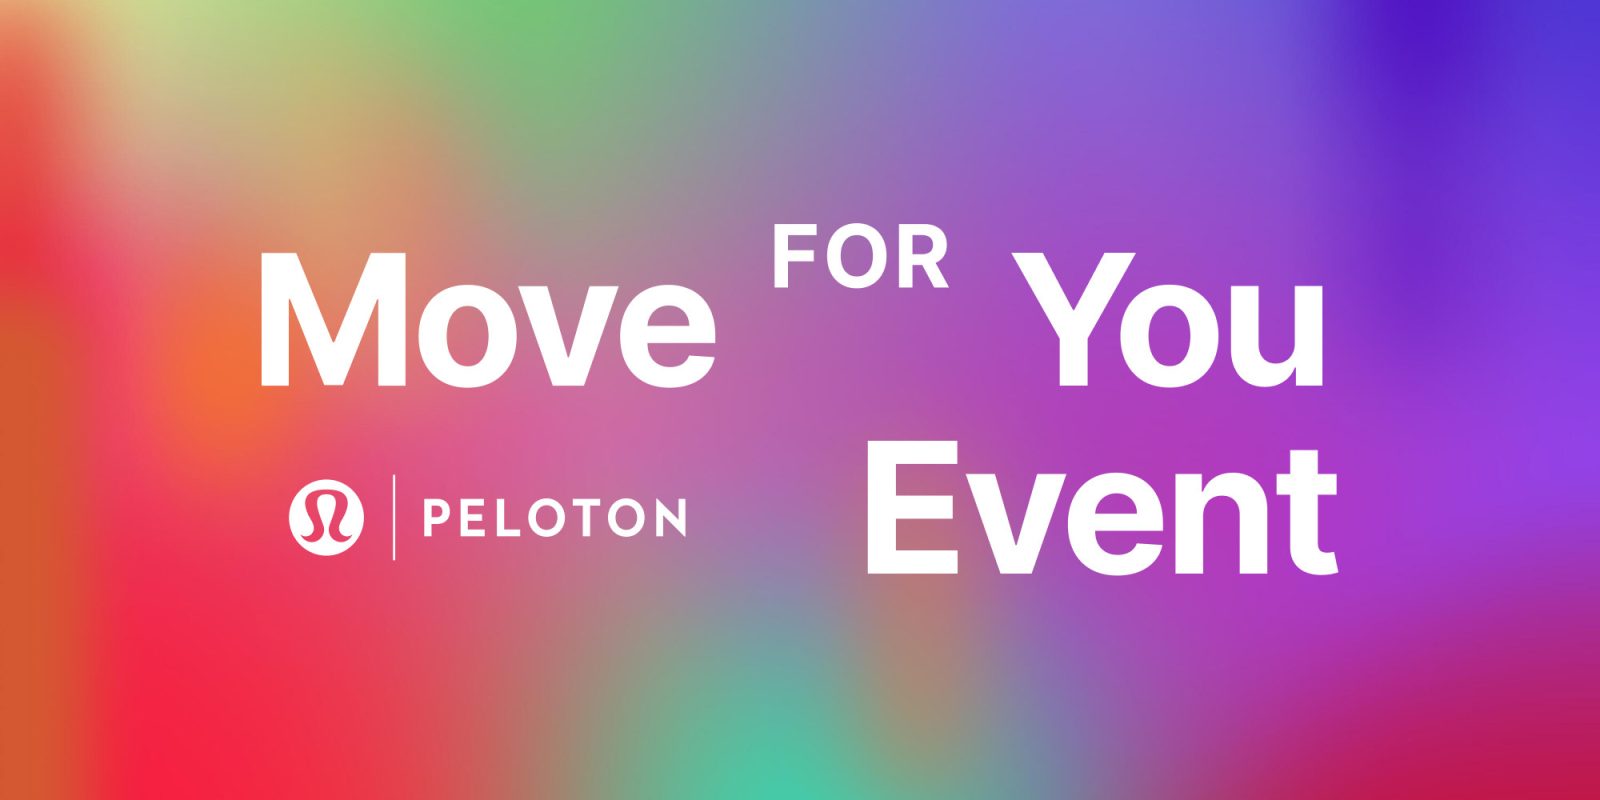 Peloton stock jumps on Lululemon partnership 